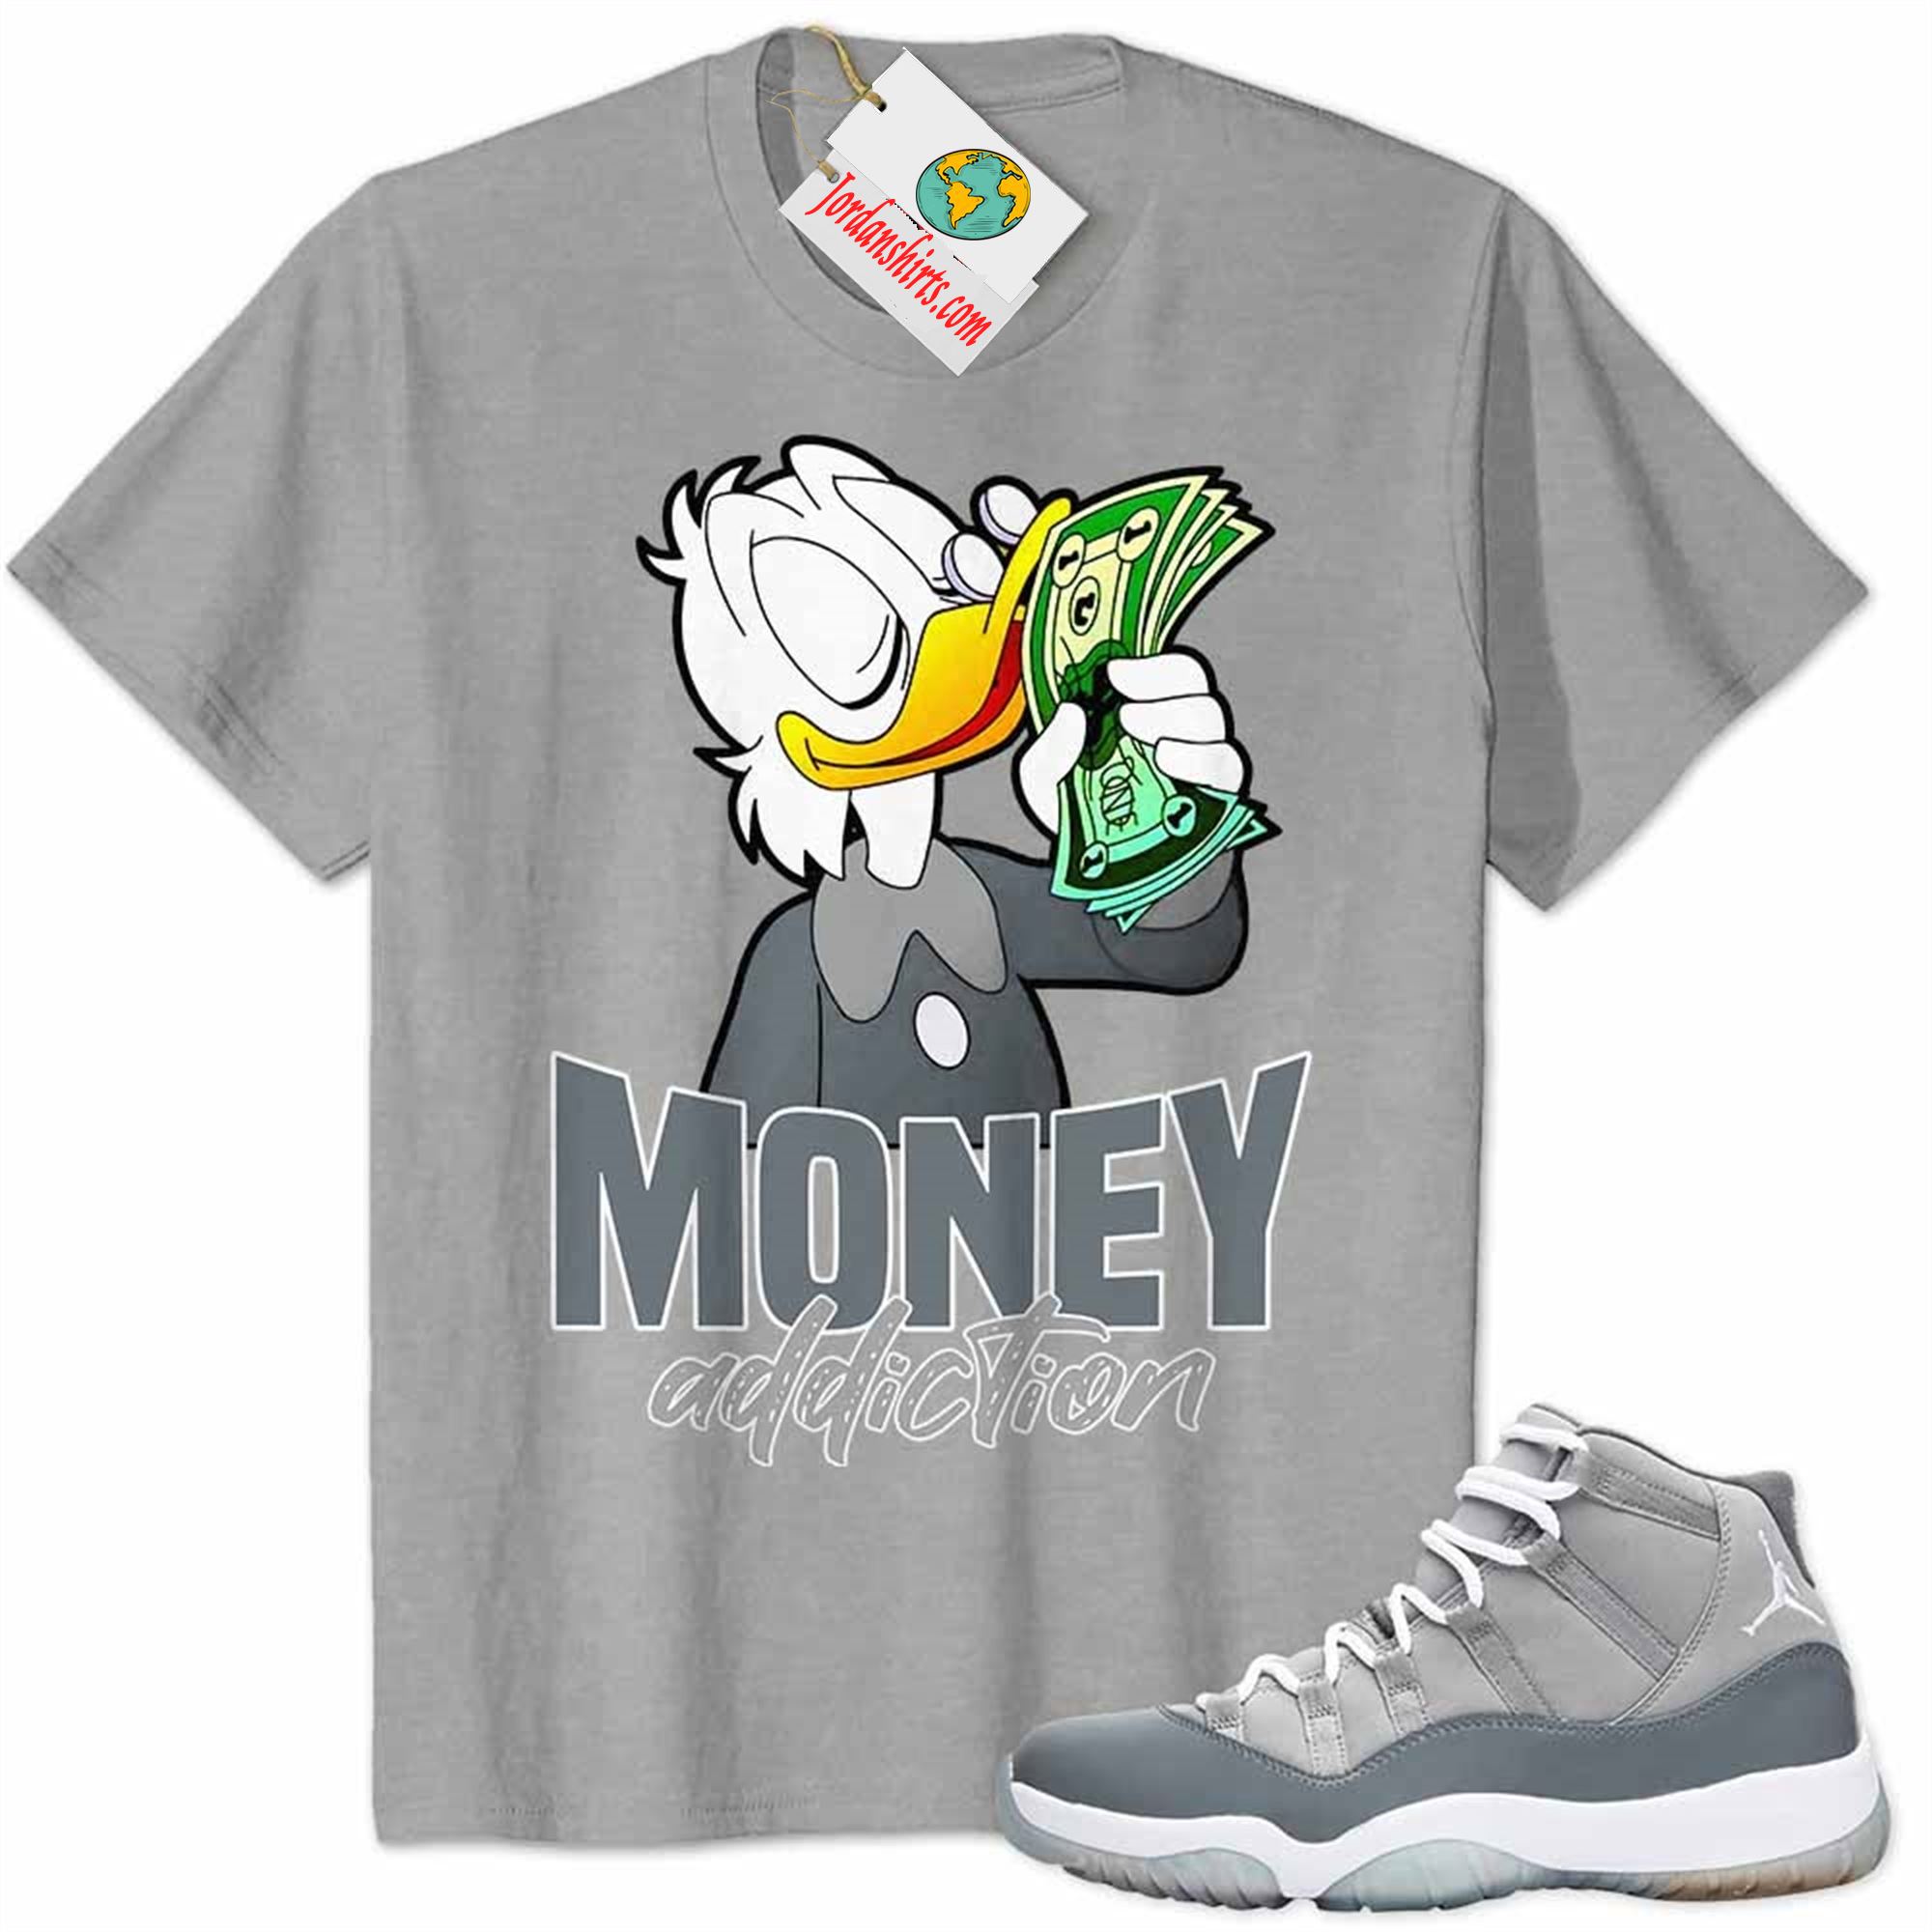 Jordan 11 Shirt, Cool Grey 11s Shirt Scrooge Mcduck Money Addiction Grey Size Up To 5xl